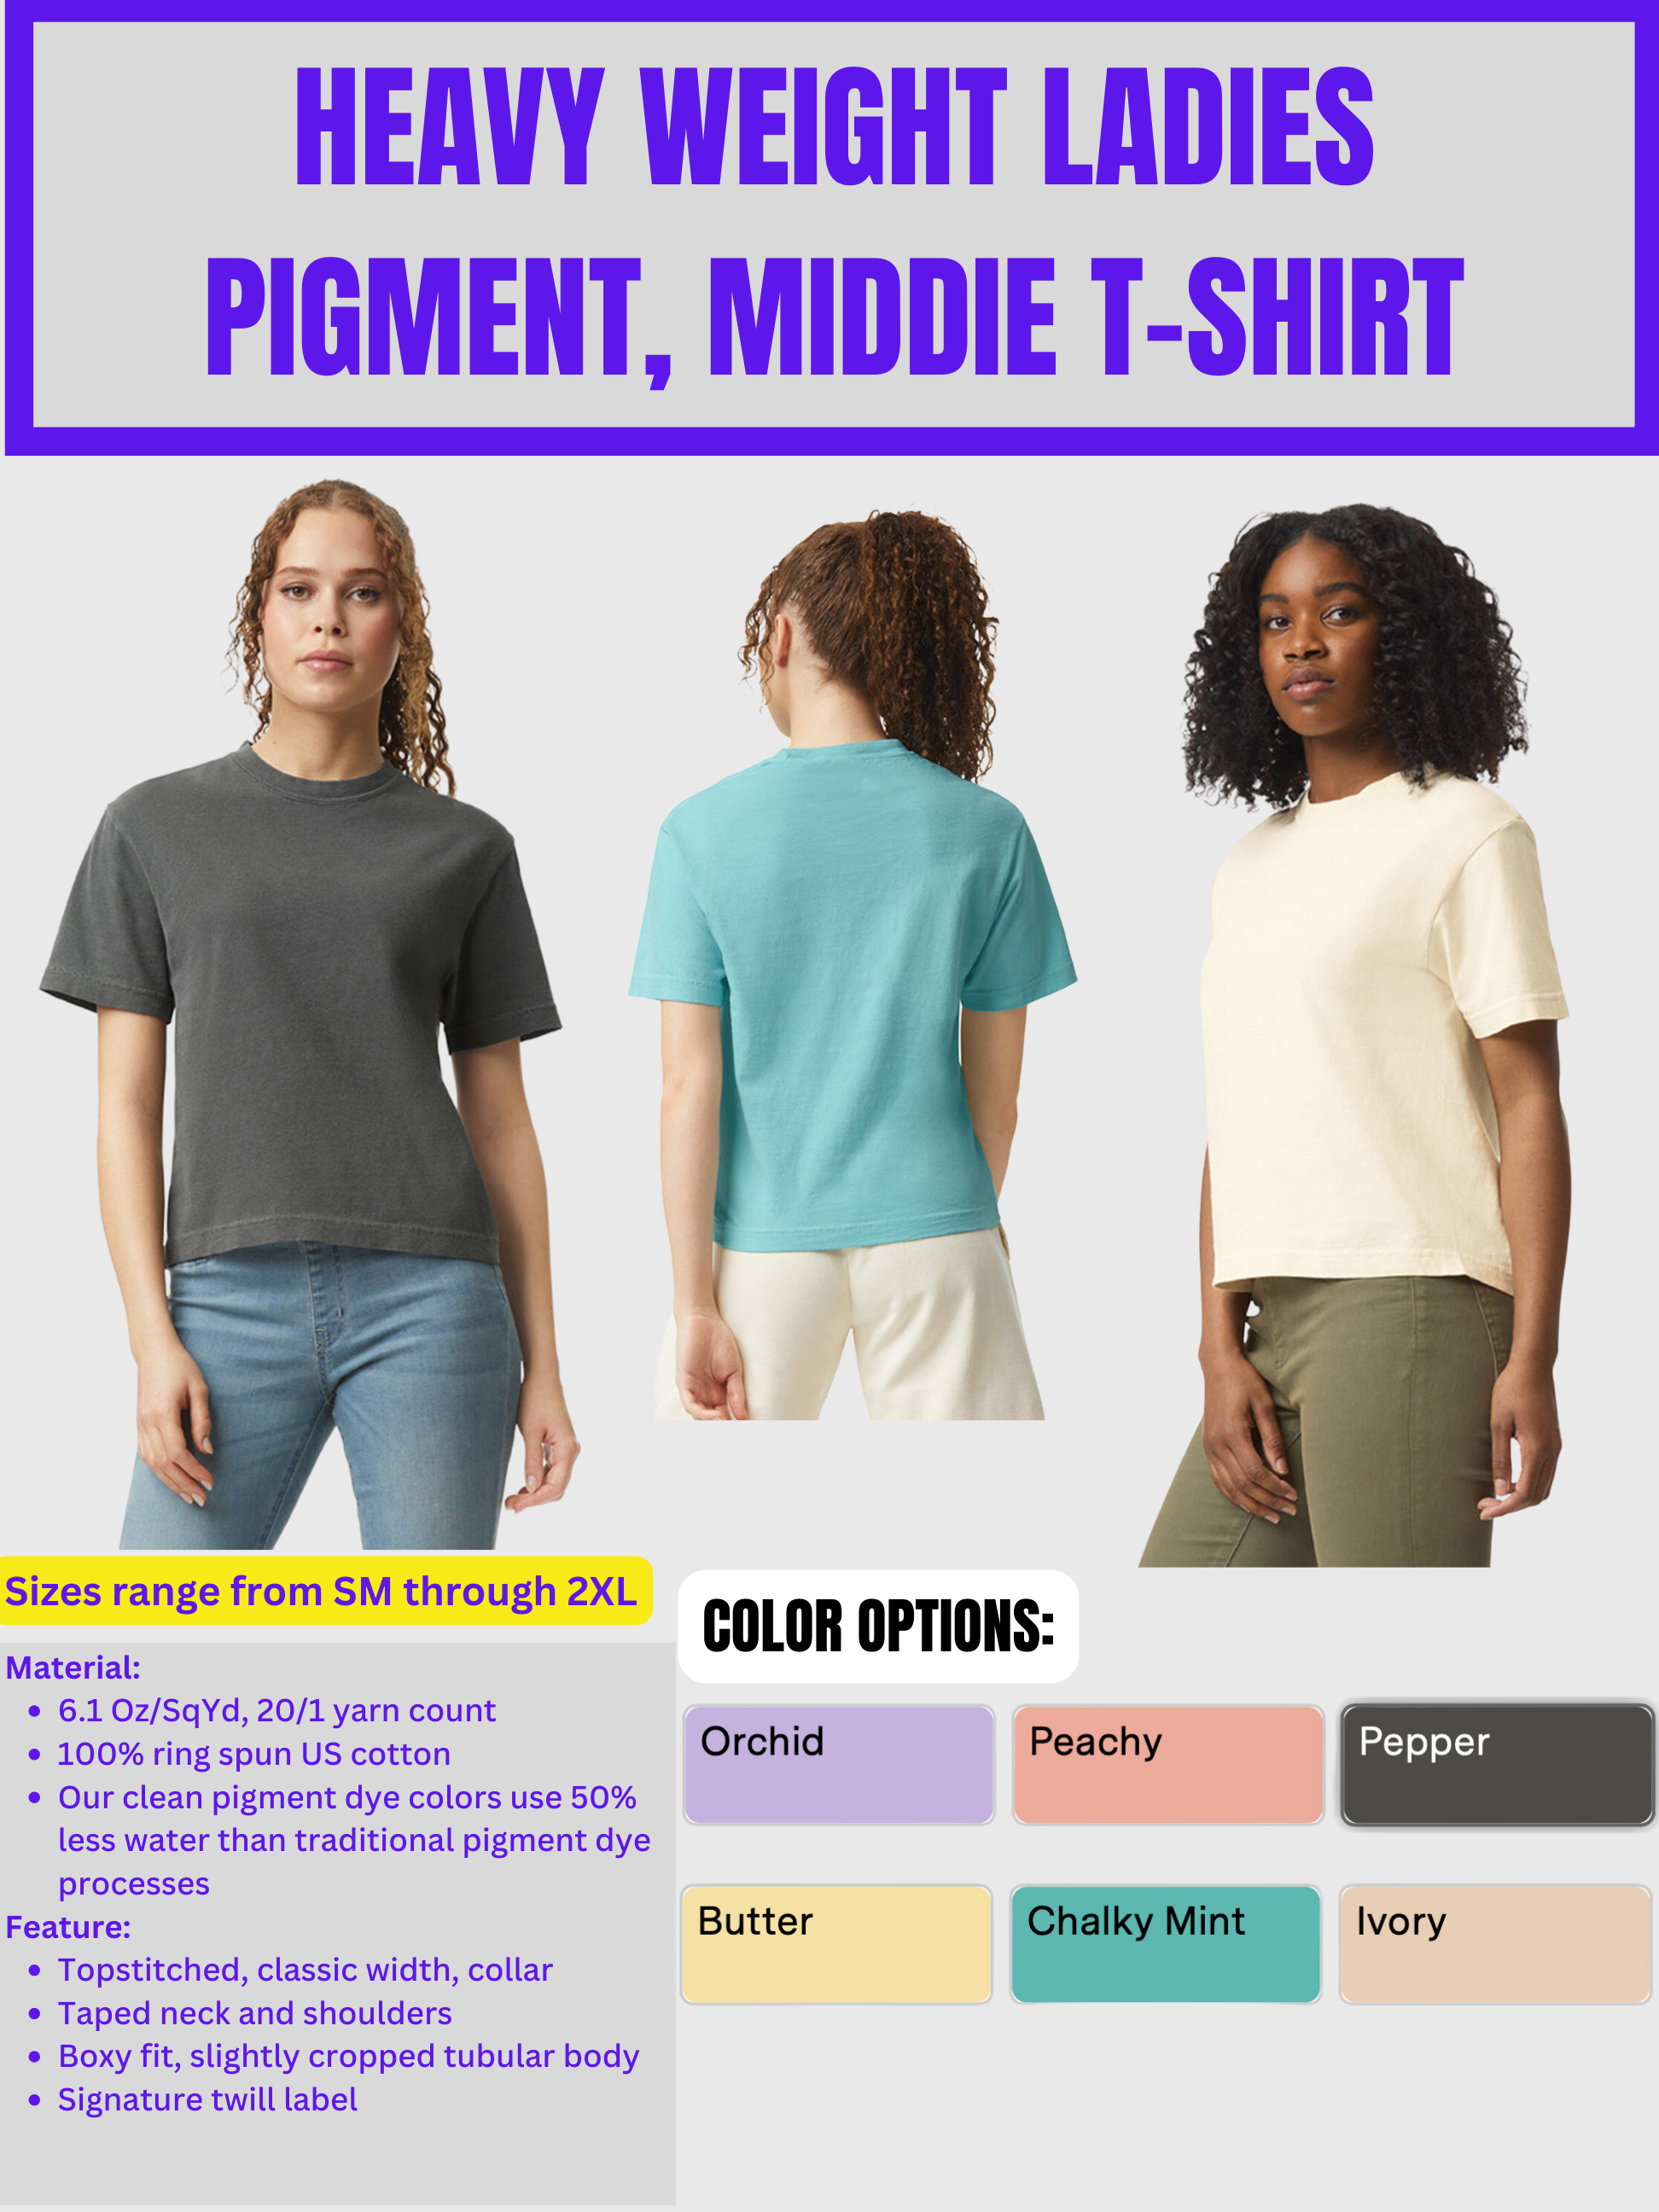 Ladies Cropped Shirts (Screen Printed) - BRNDURNAME